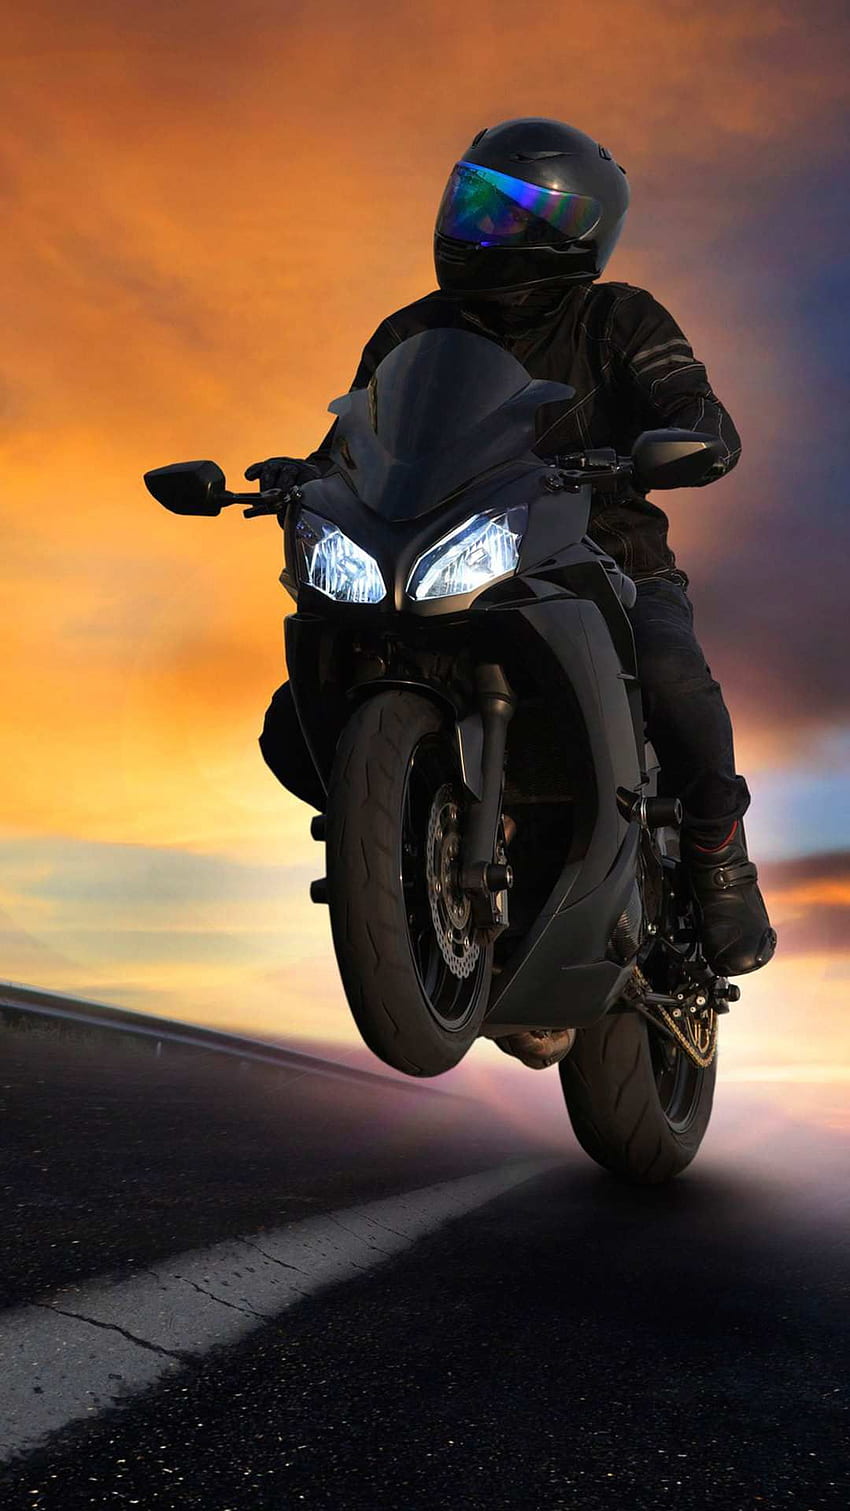 Wallpaper ID 2  motorcycle motorcyclist bike equipment side view 4k  free download